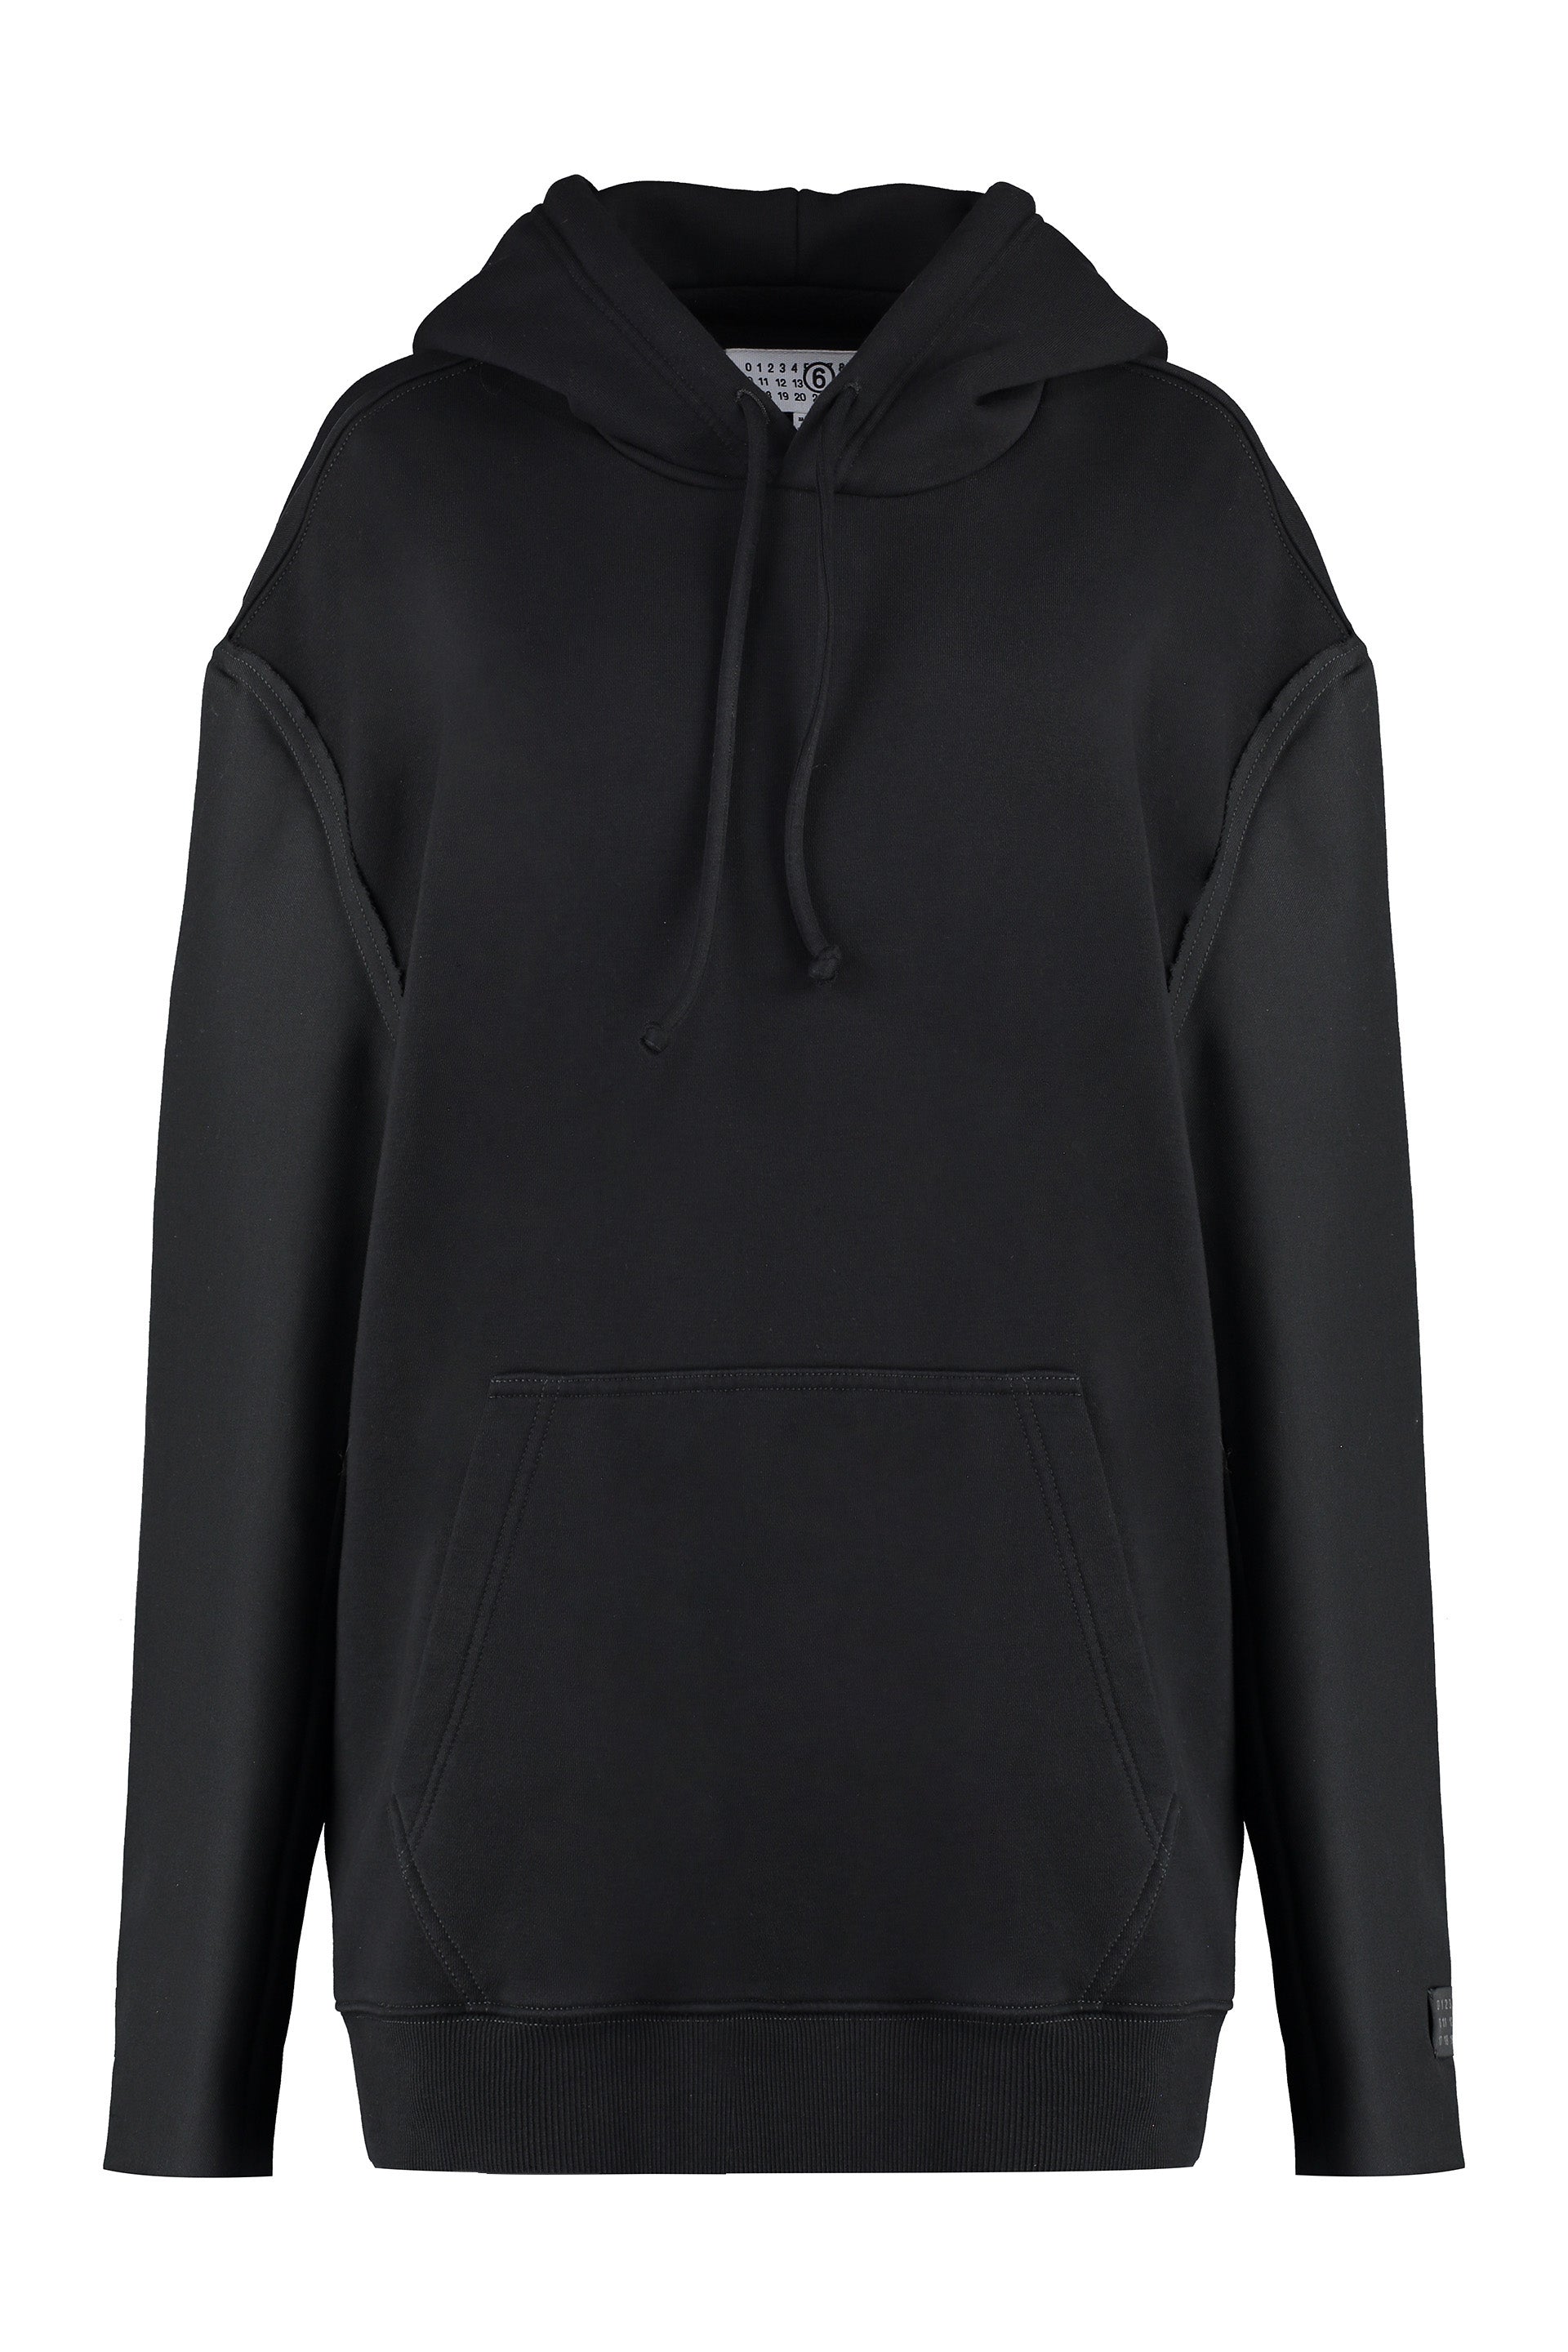 Shop Mm6 Maison Margiela Stylish Women's Black Hooded Sweatshirt